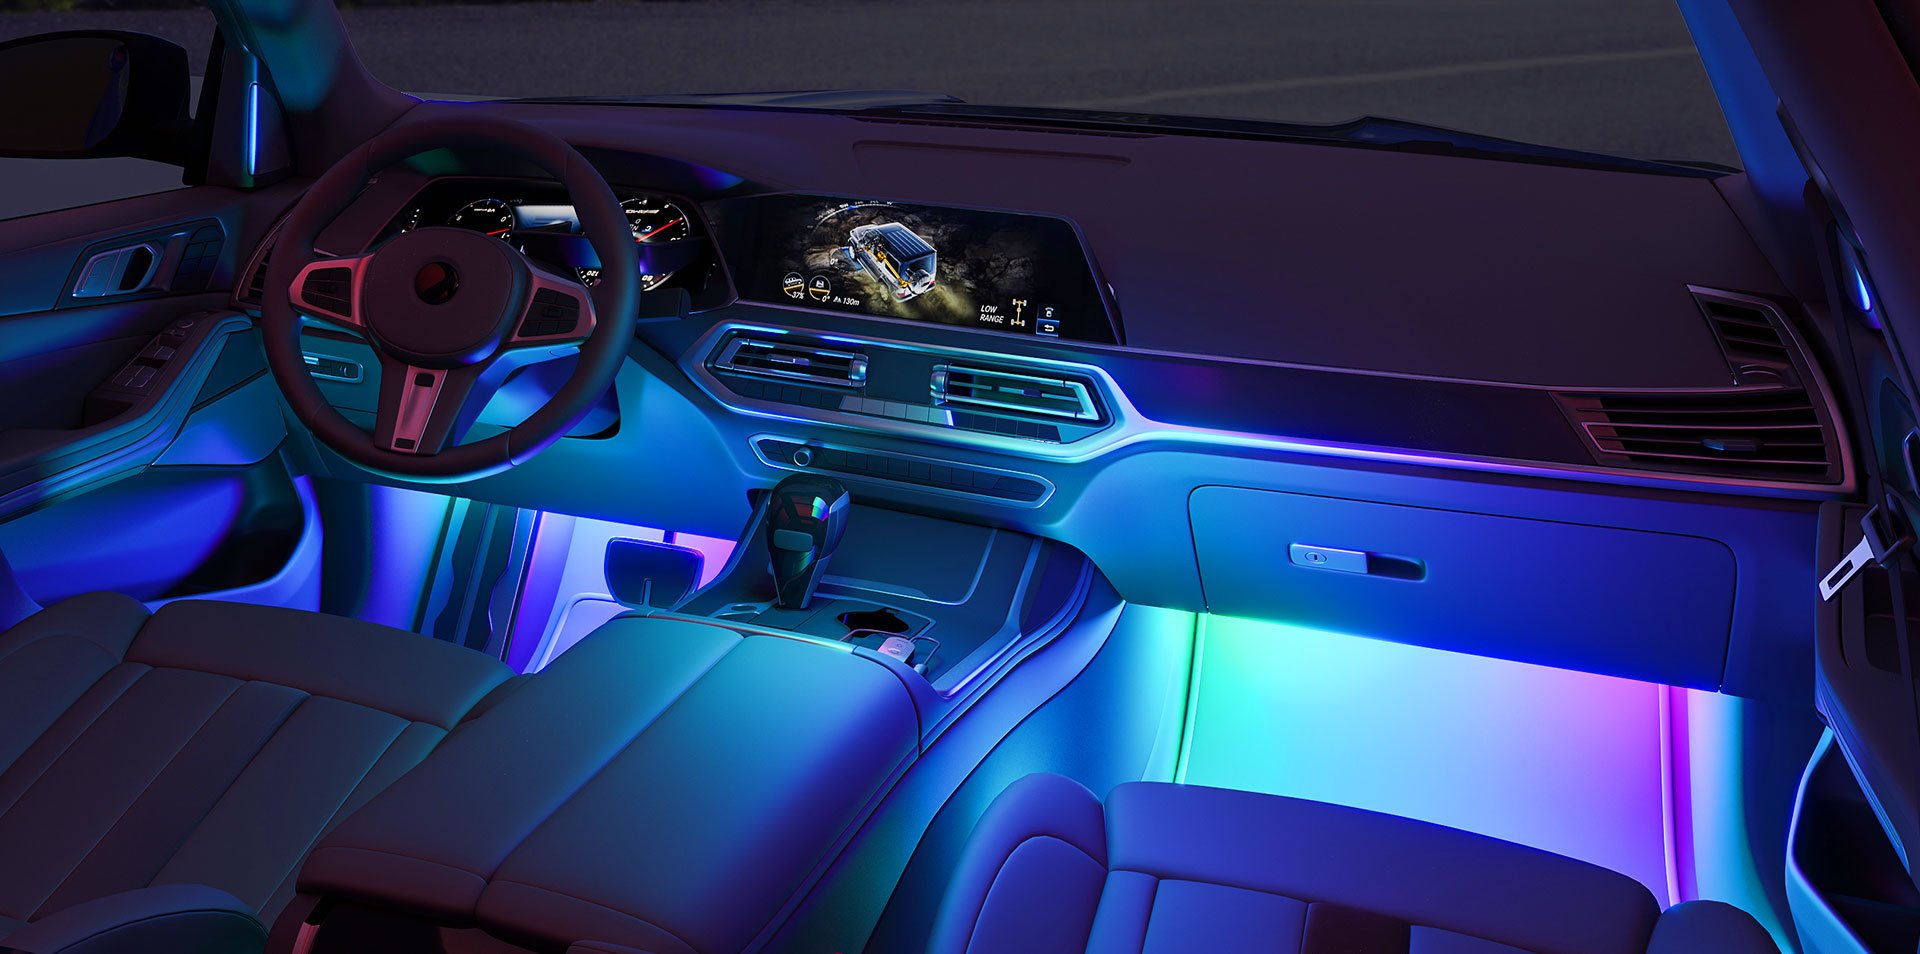 Govee Interior LED Car Light 48-in Smart Plug-in LED Under Cabinet Strip  Light at